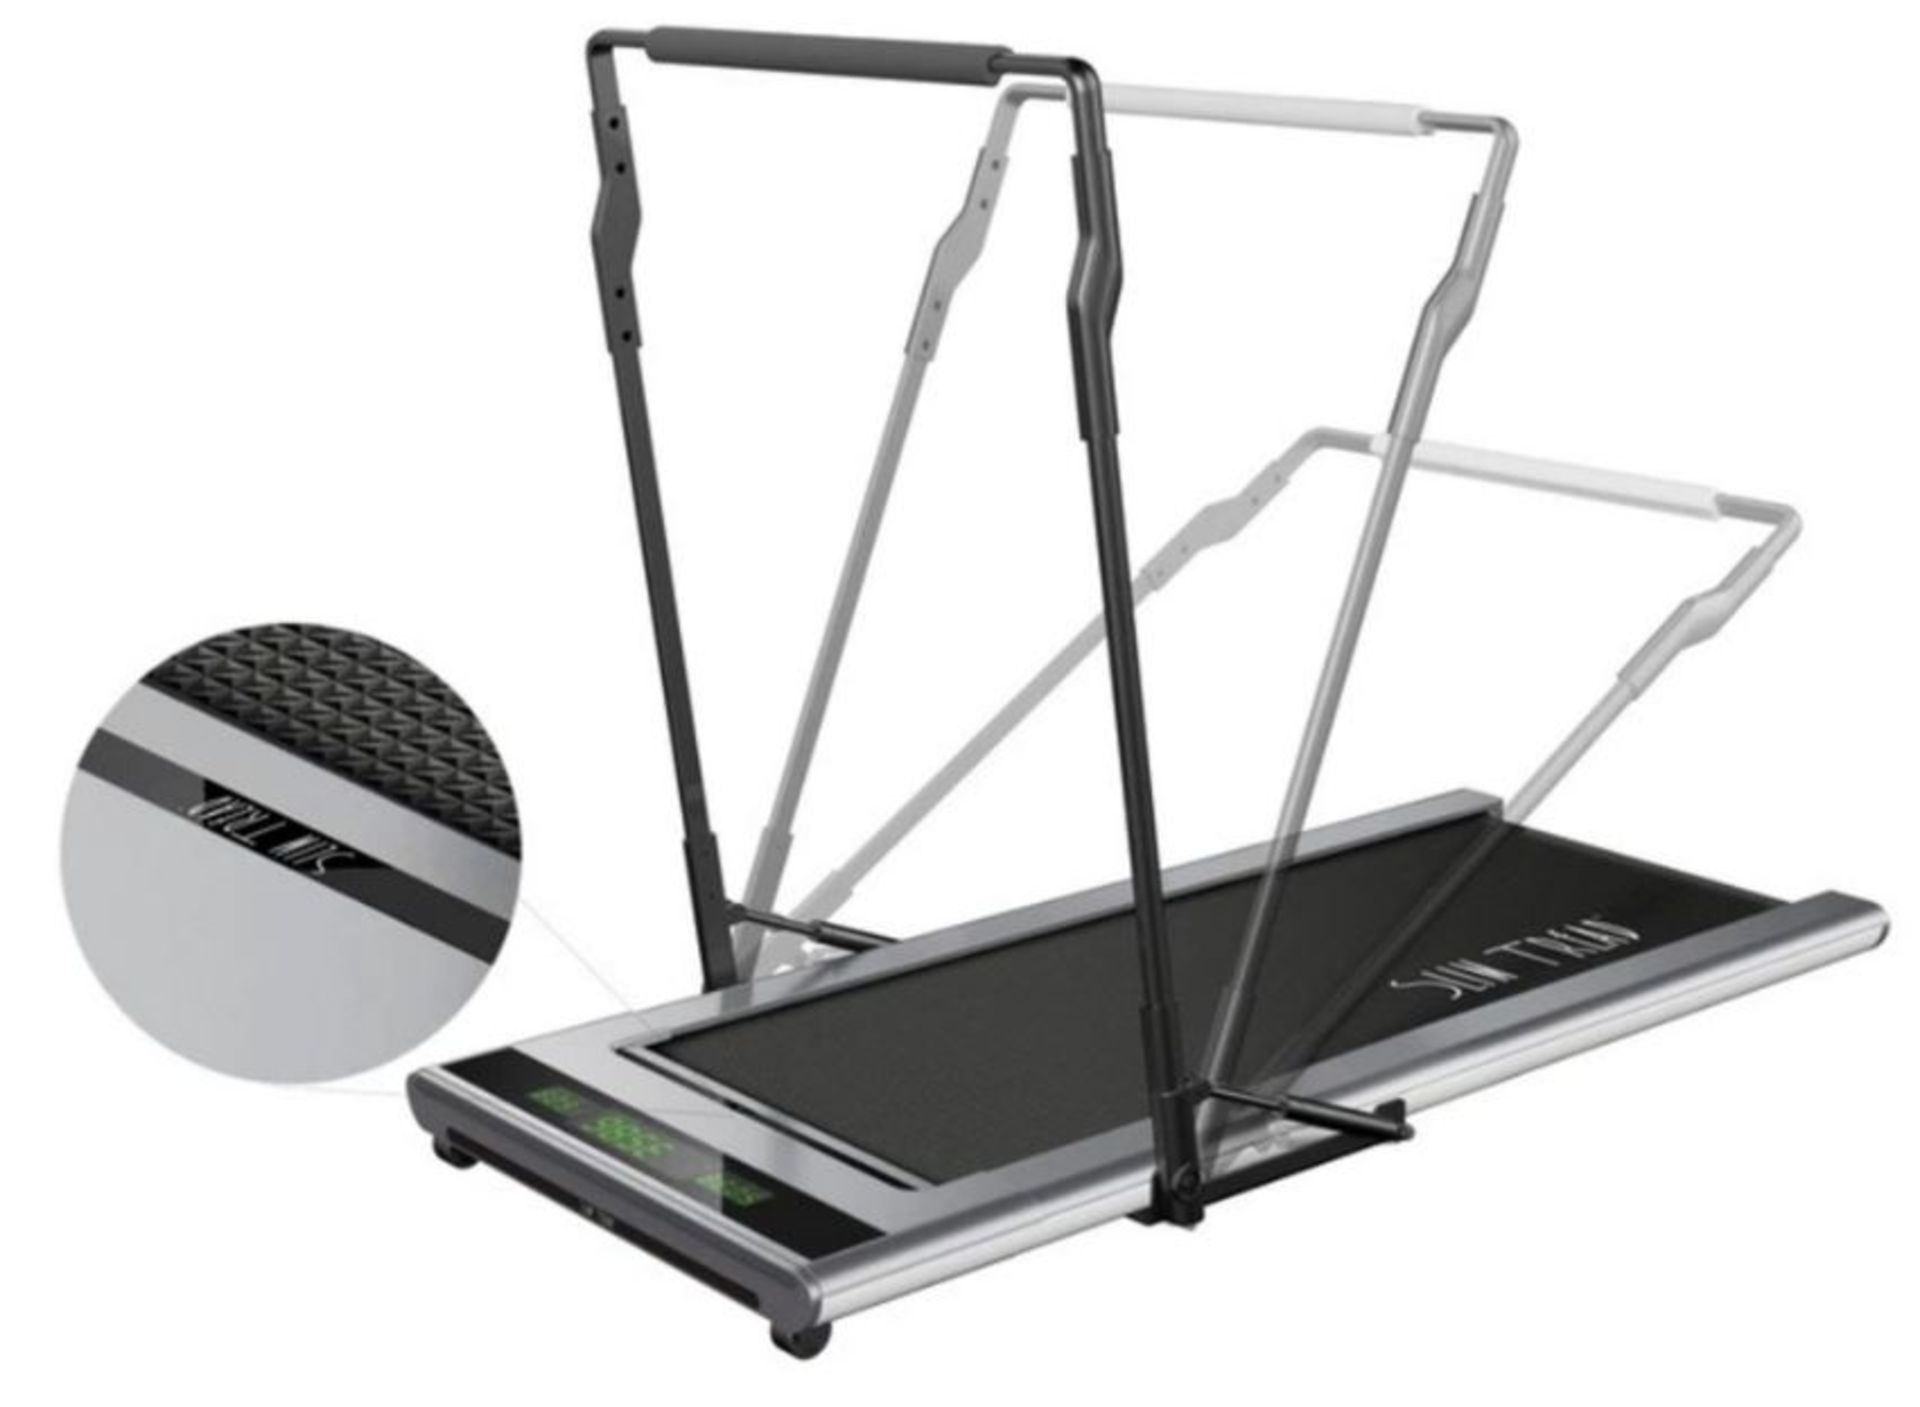 Resale Job Lot - 10 x Slim Tread Ultra Thin Smart Treadmill Running / Walking Machines - Lightweight - Image 6 of 10